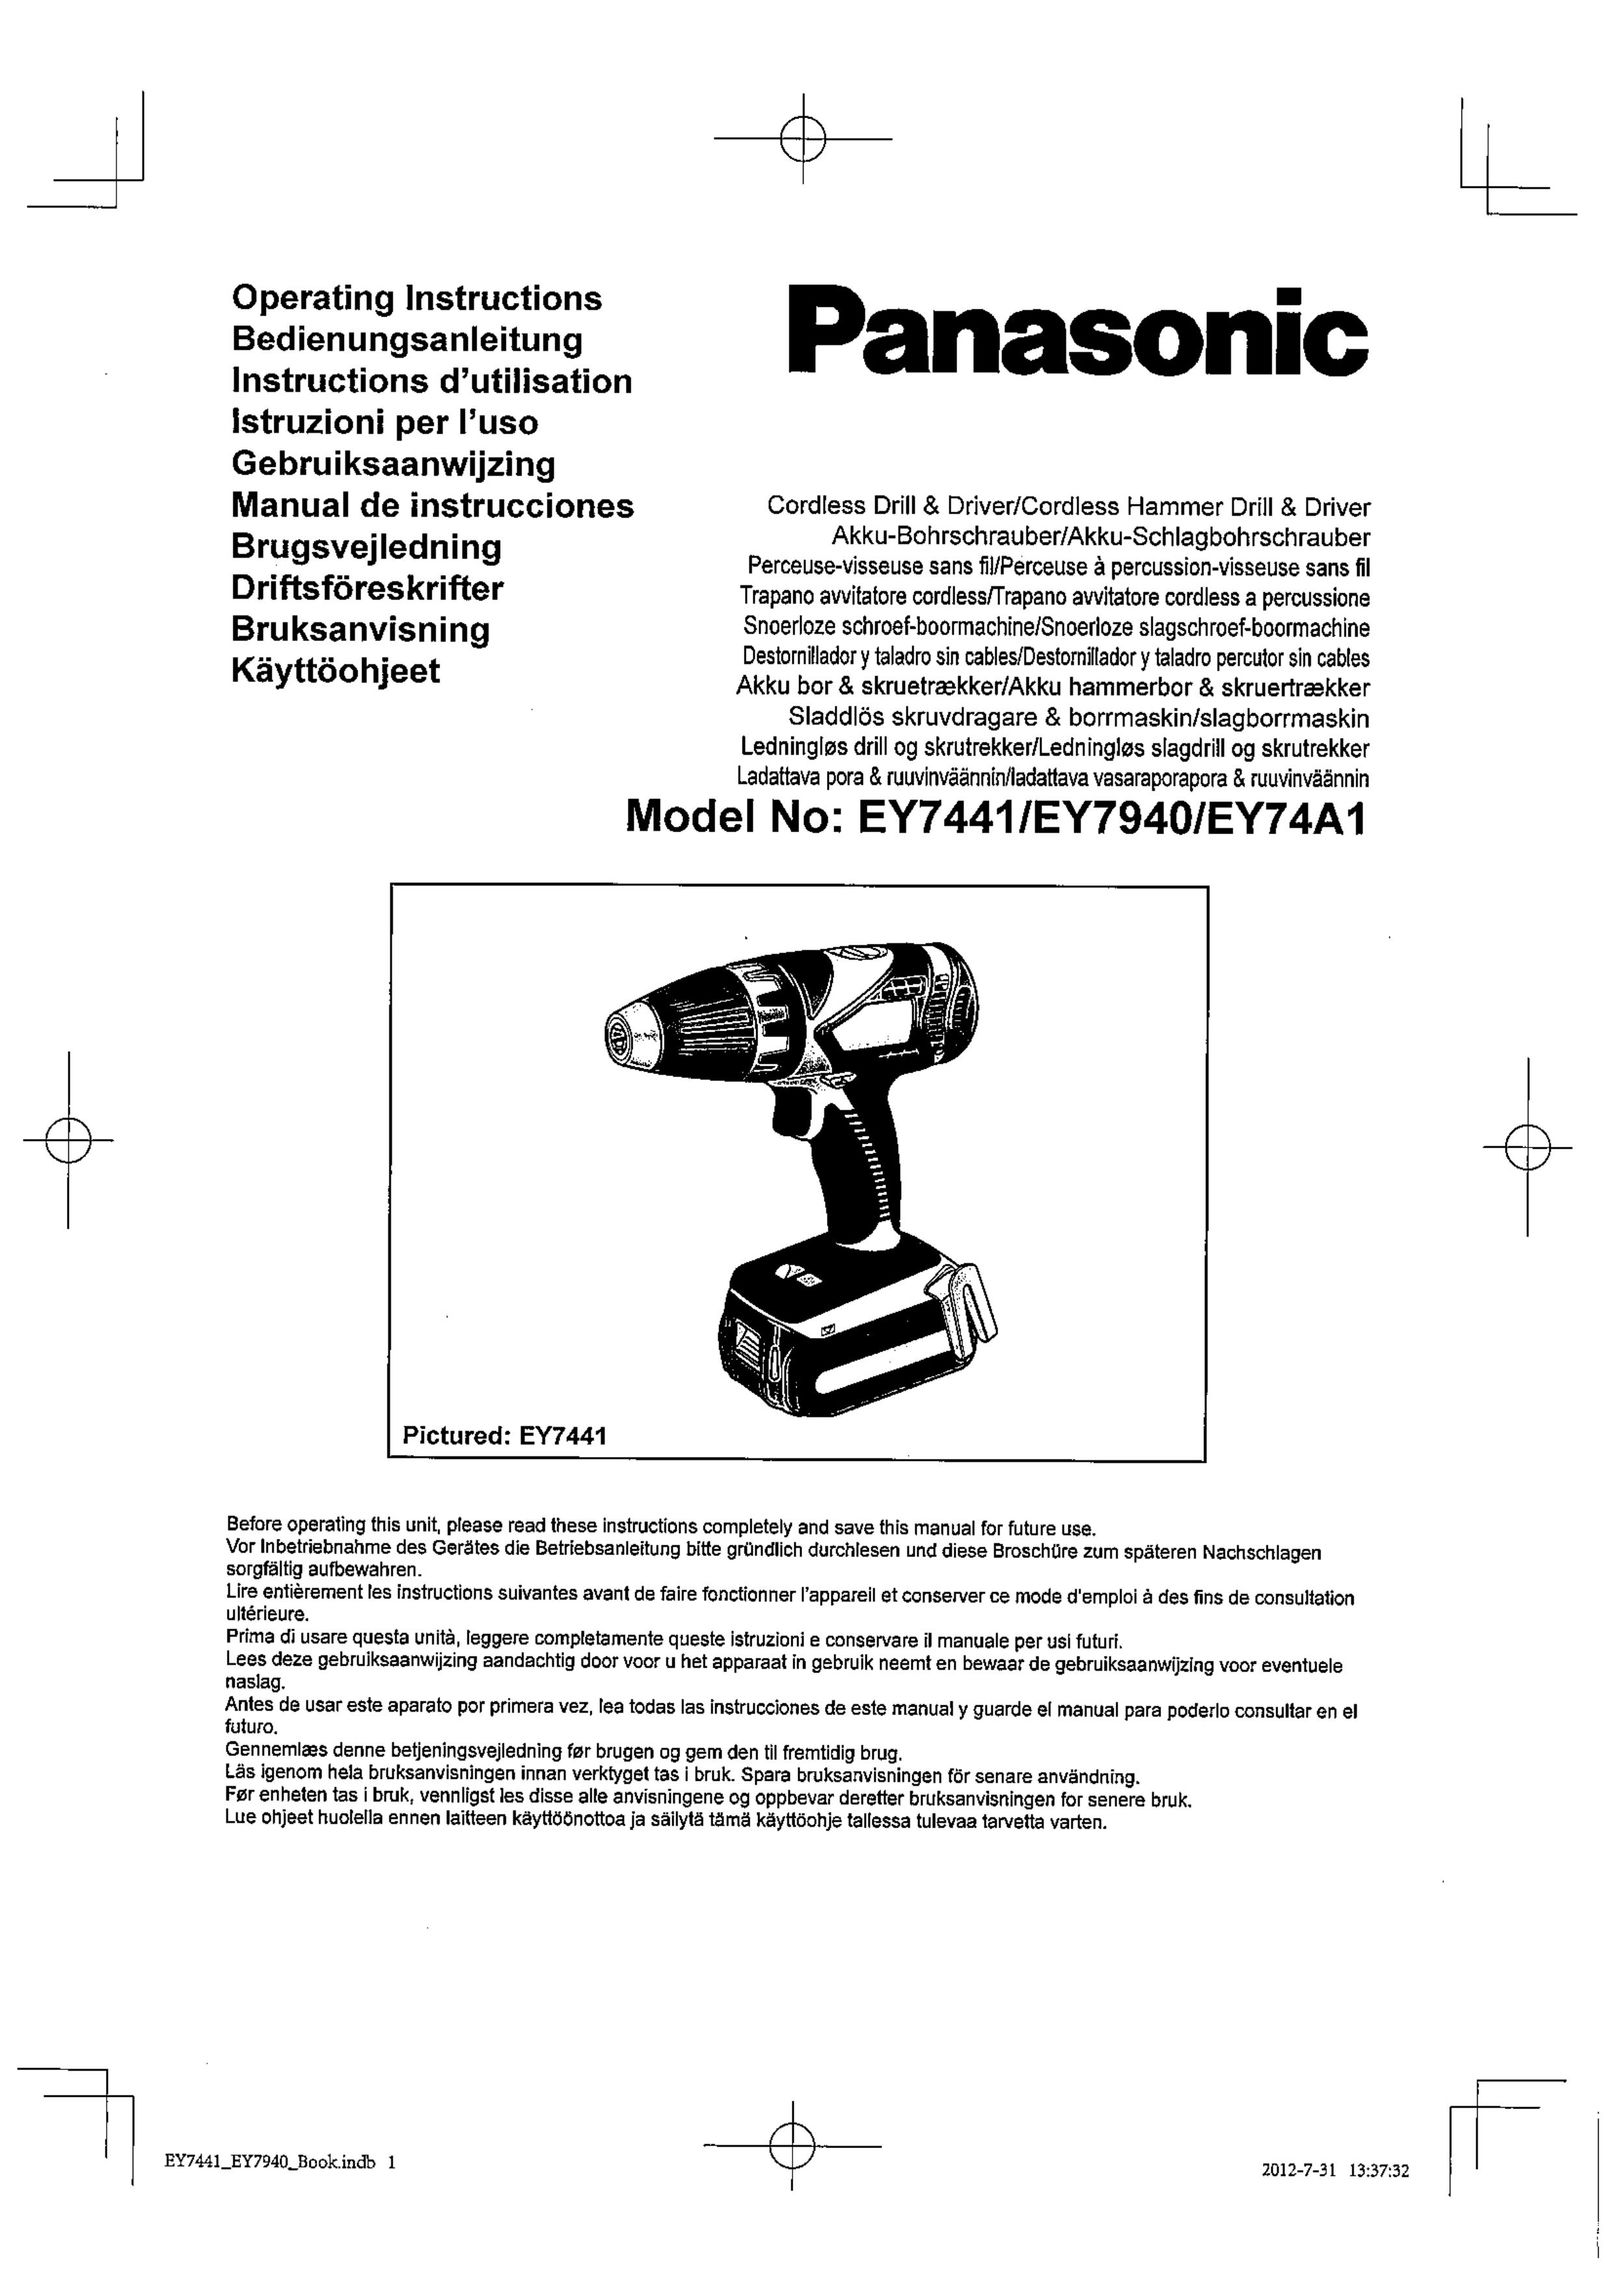 Panasonic ey7940 Cordless Drill User Manual